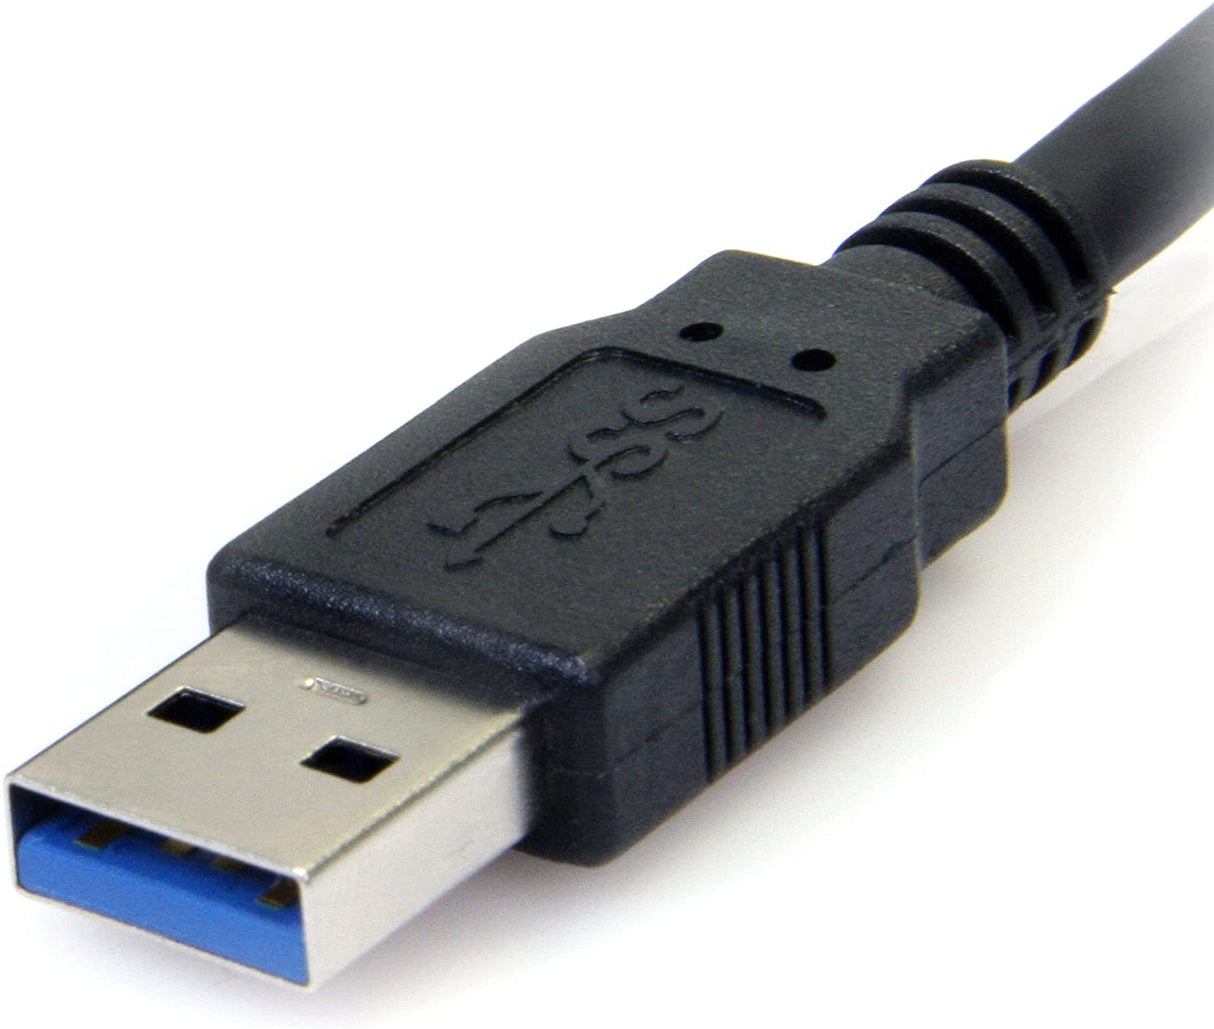 StarTech.com 6 ft / 2m Black SuperSpeed USB 3.0 Cable A to B - USB 3 A (m) to USB 3 B (m) (USB3SAB6BK)